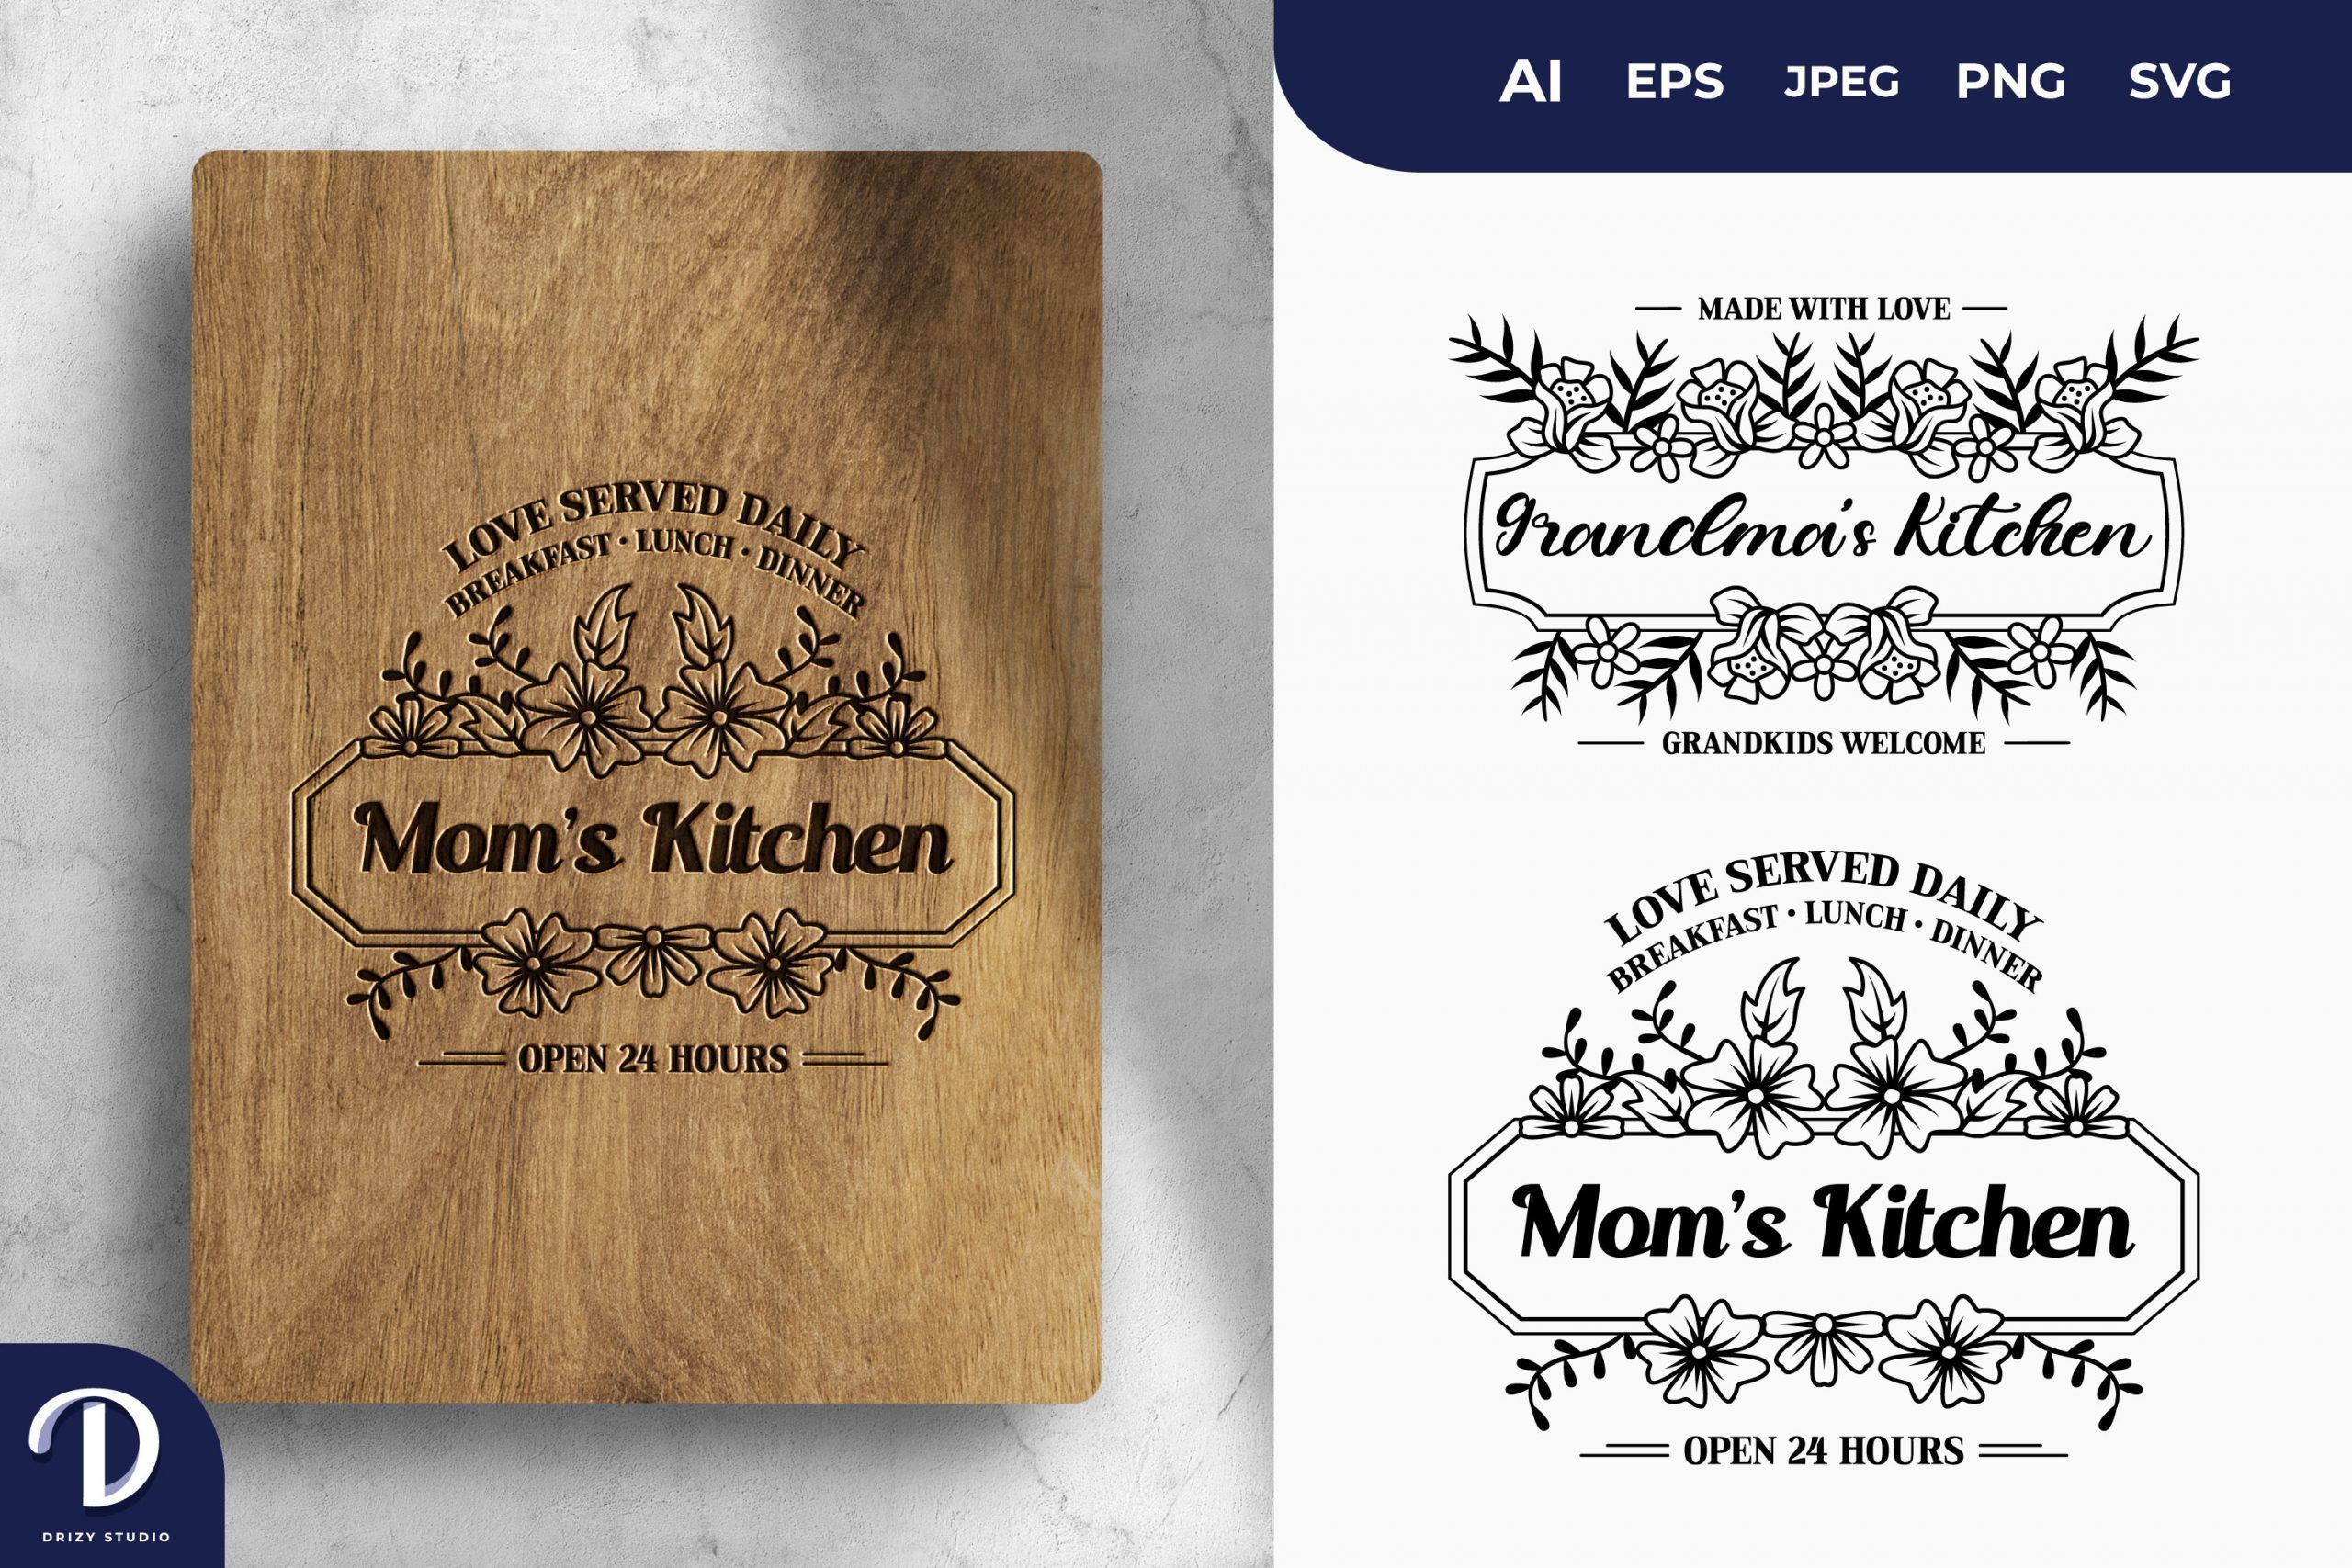 Grandma's kitchen where sweet SVG, Cutting Board SVG Design